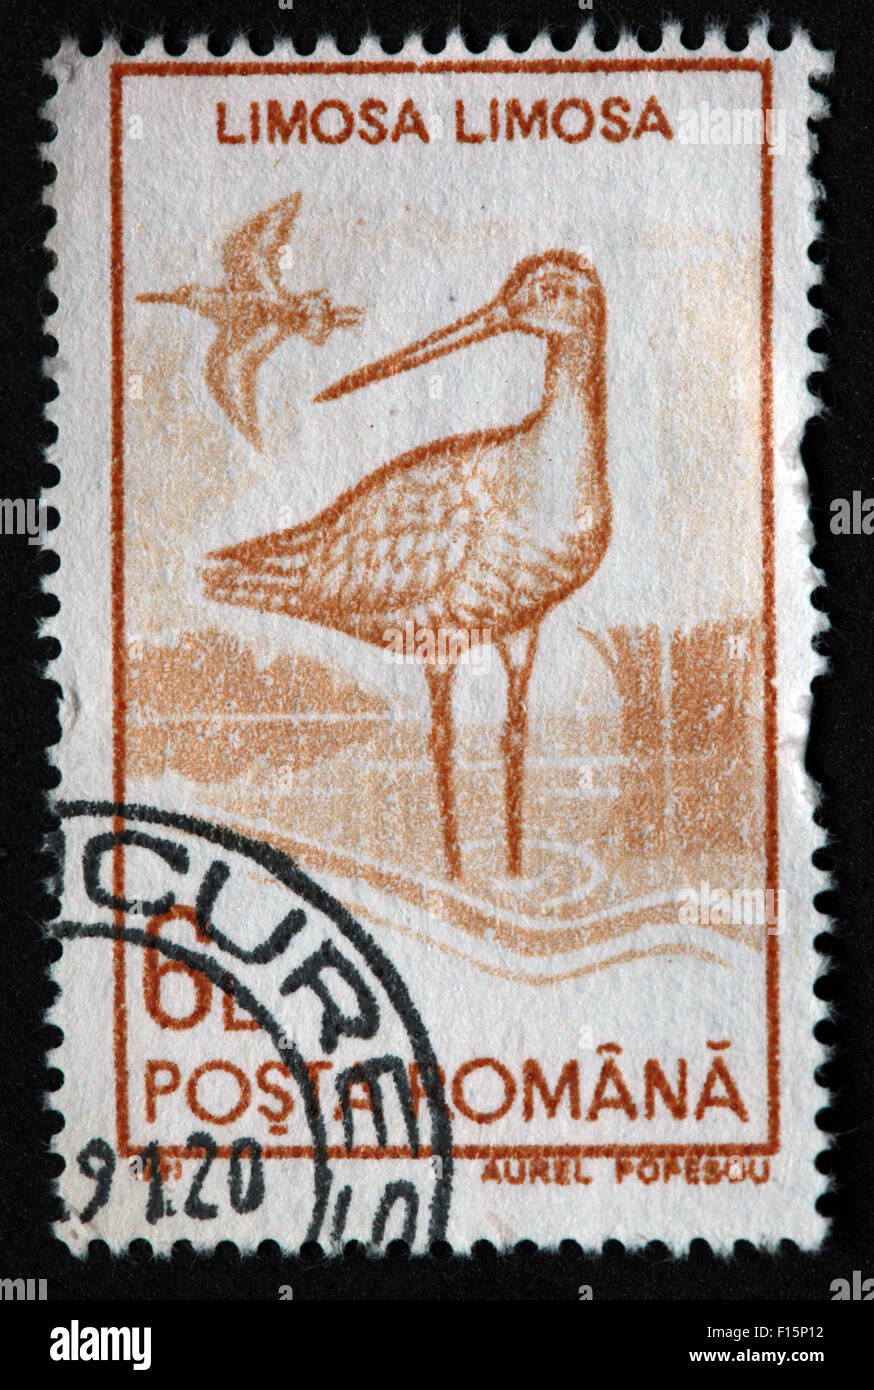 1991 Posta Romana Limosa Limosa bird Egret Aurel Popescu Stamp Stock Photo